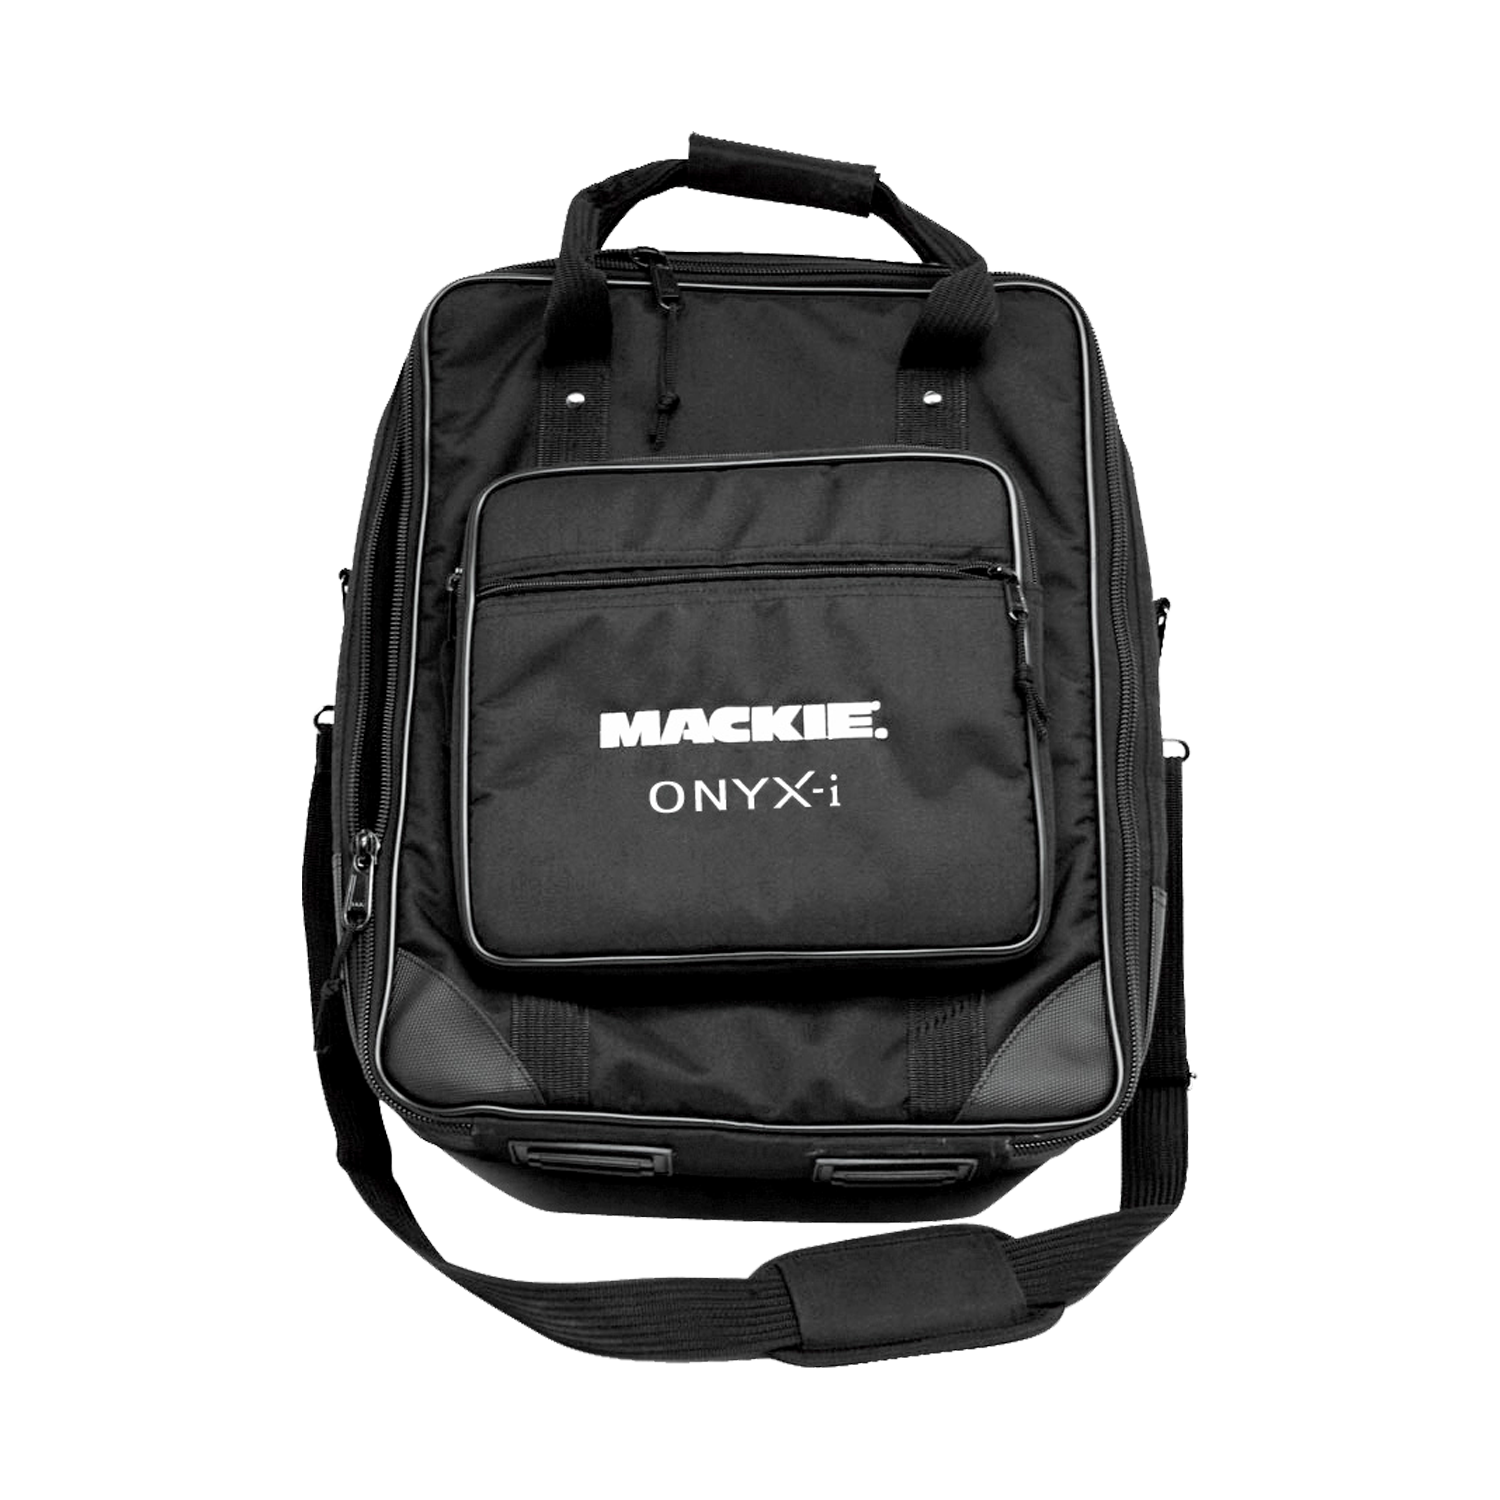 Mackie Onyx 1620i Mixer Bag